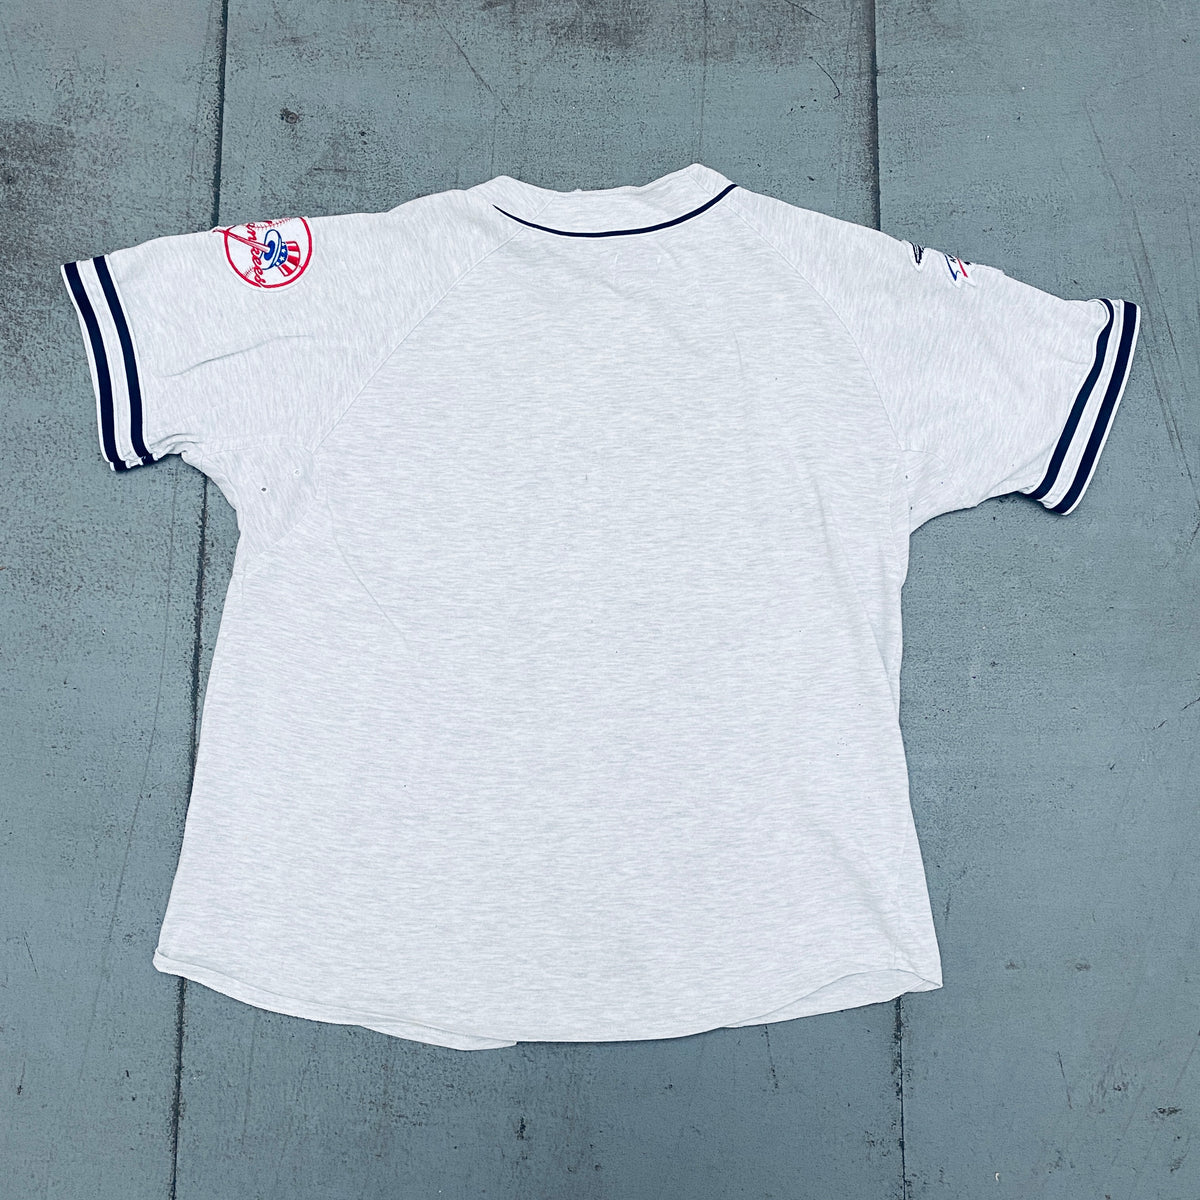 Build-A-Bear Phoenix Suns Ringer T-Shirt in White